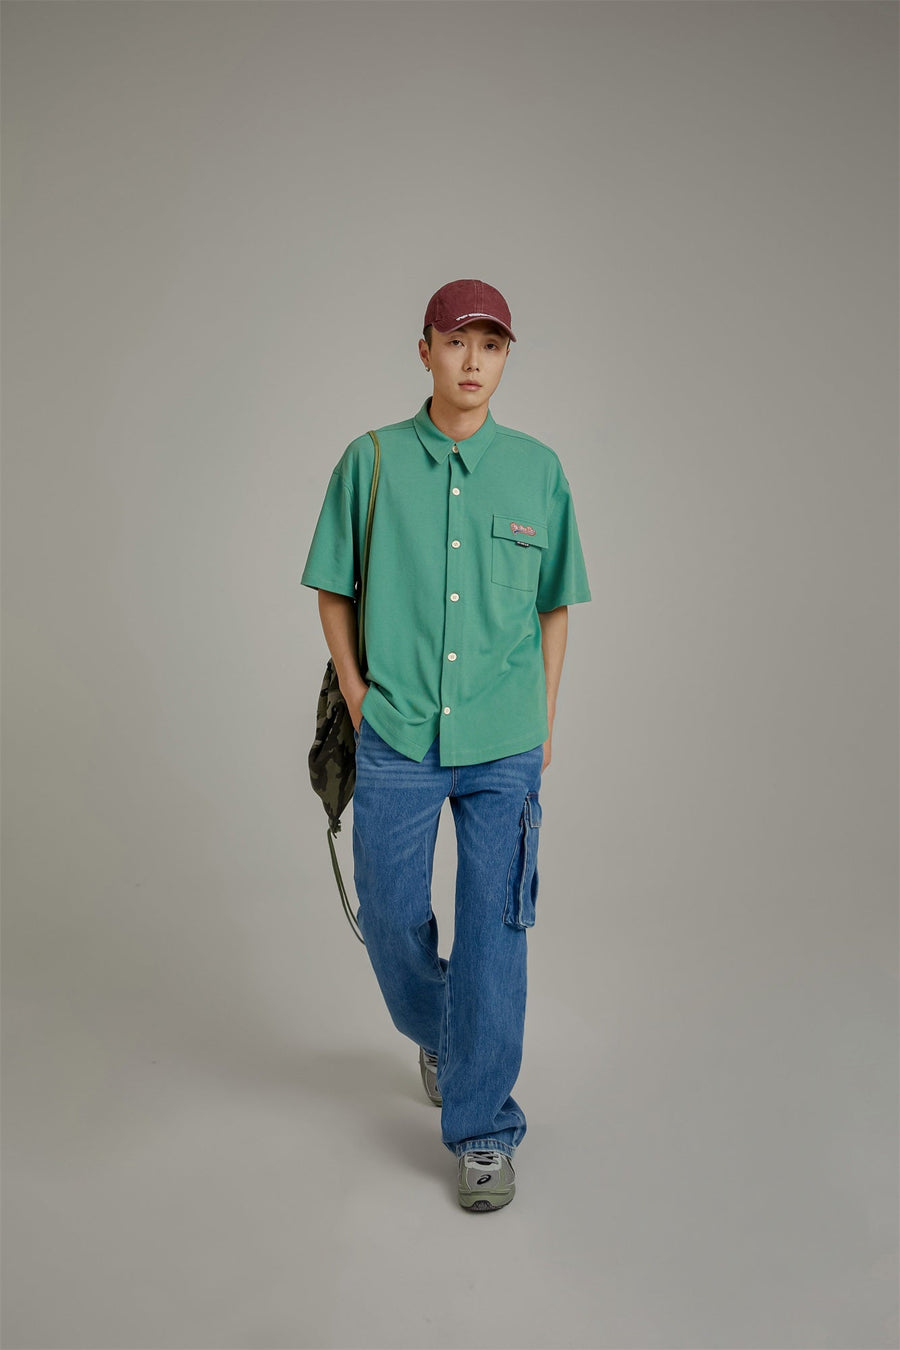 CHUU Embroidered Pocket Shirt